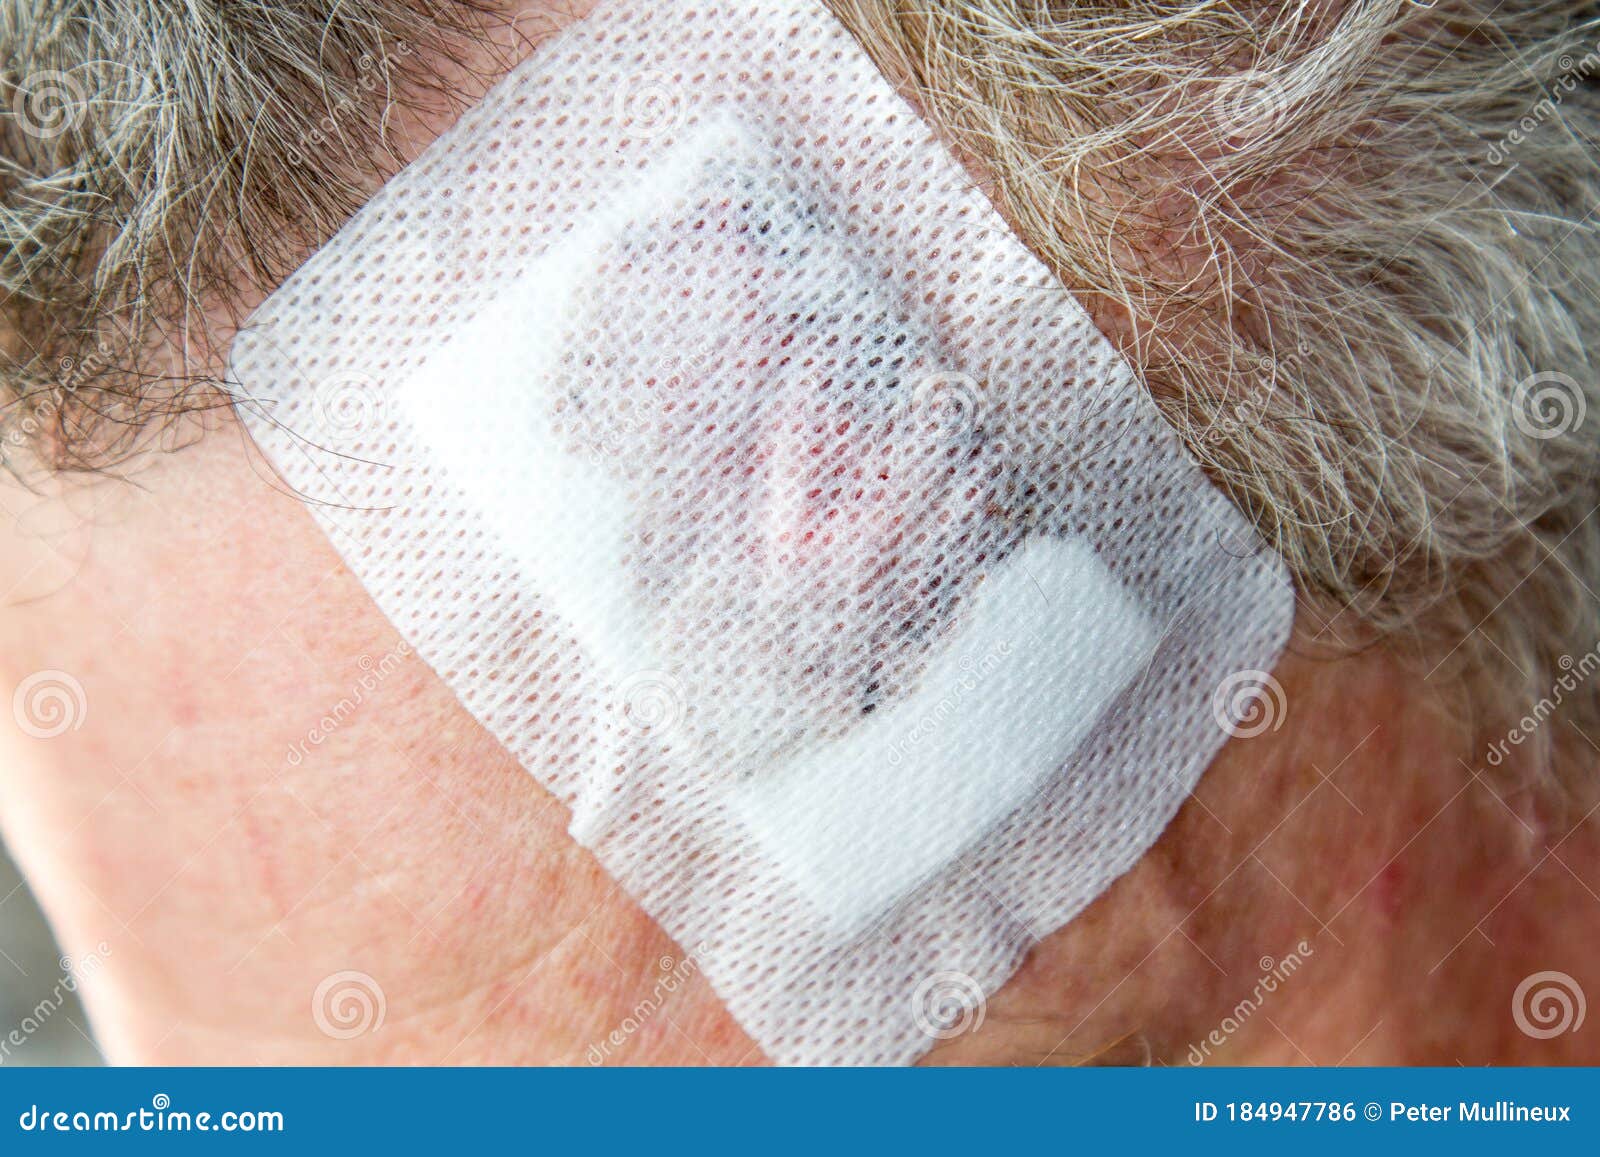 dre of a lentigo maligna, melanoma in situ on the forehead of a 64 year old man